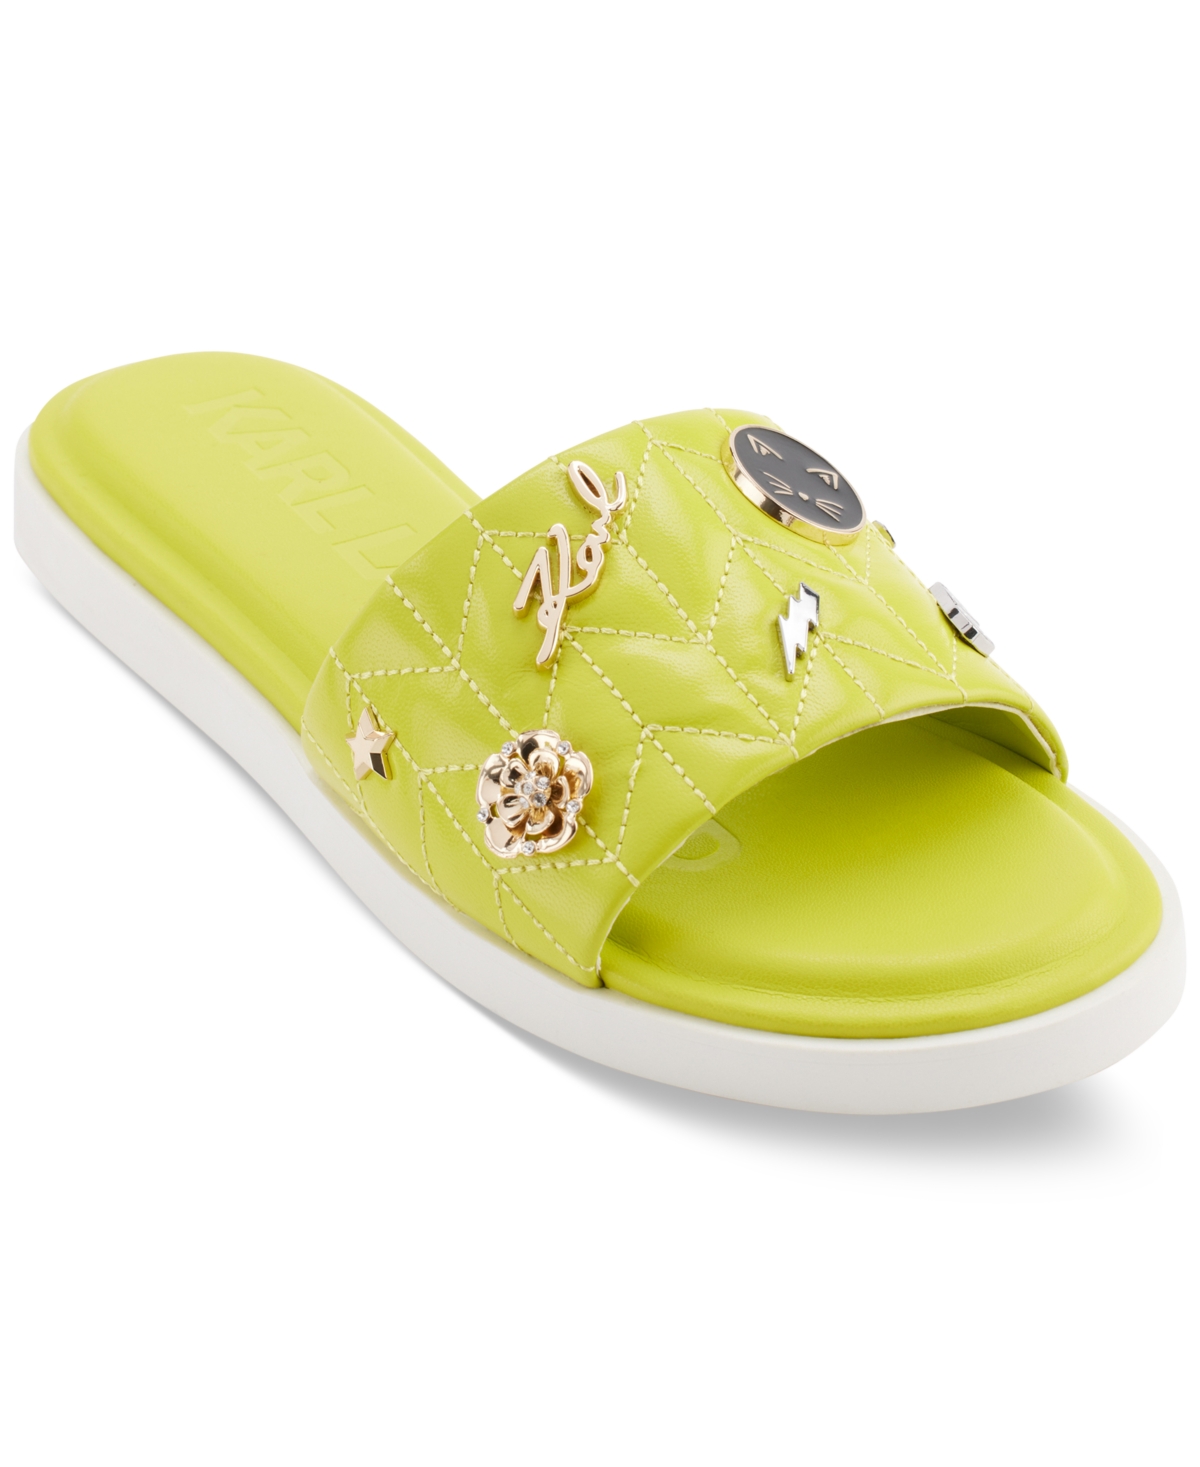 Carenza Pins Flat Slide Sandals - Brt White